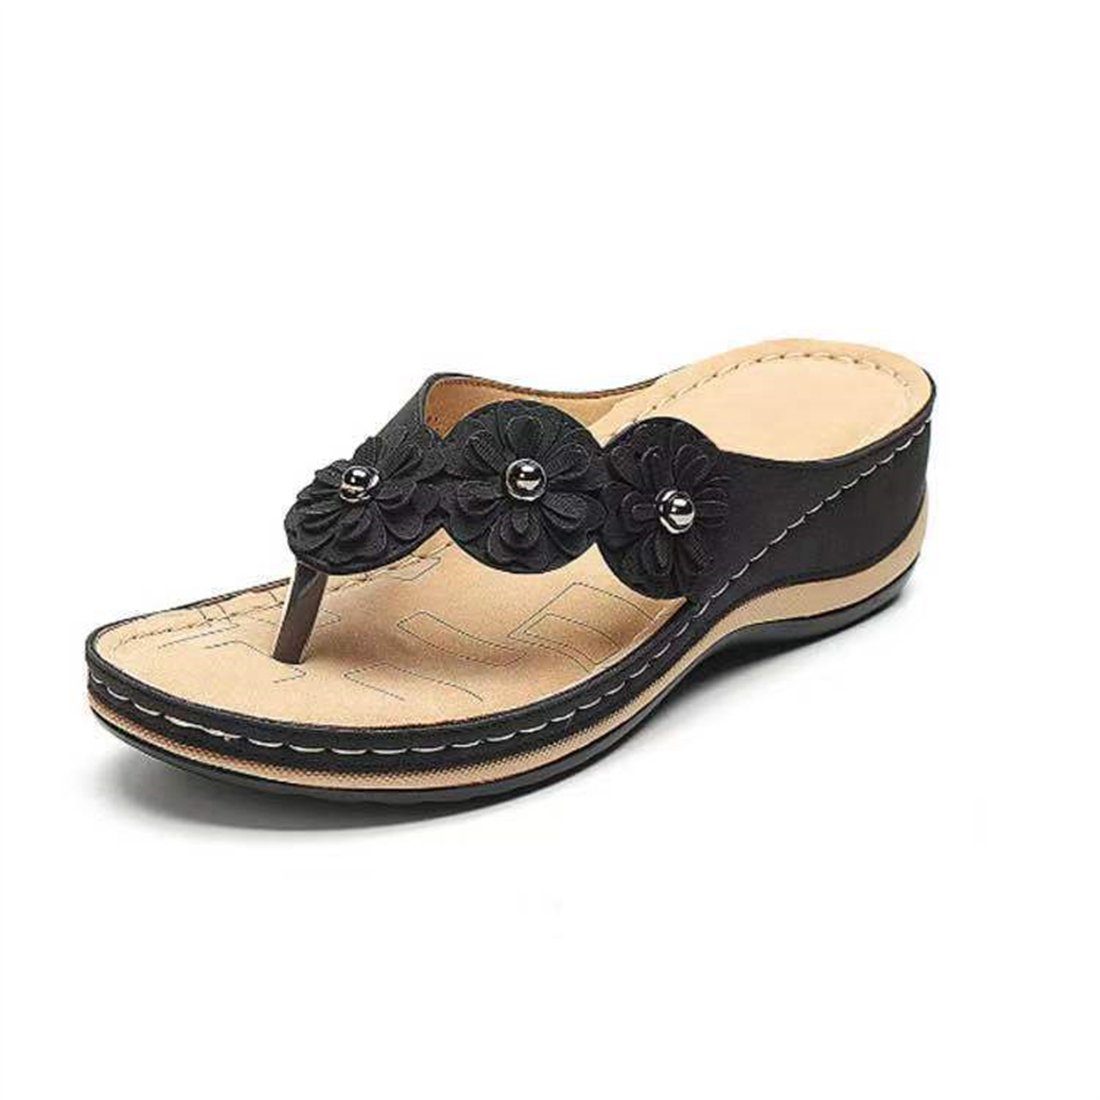 Sandale sandalen YOOdy~ Sommerliche Sandale Schwarz Sandalette,Sommer Damen-Flip-Flops-